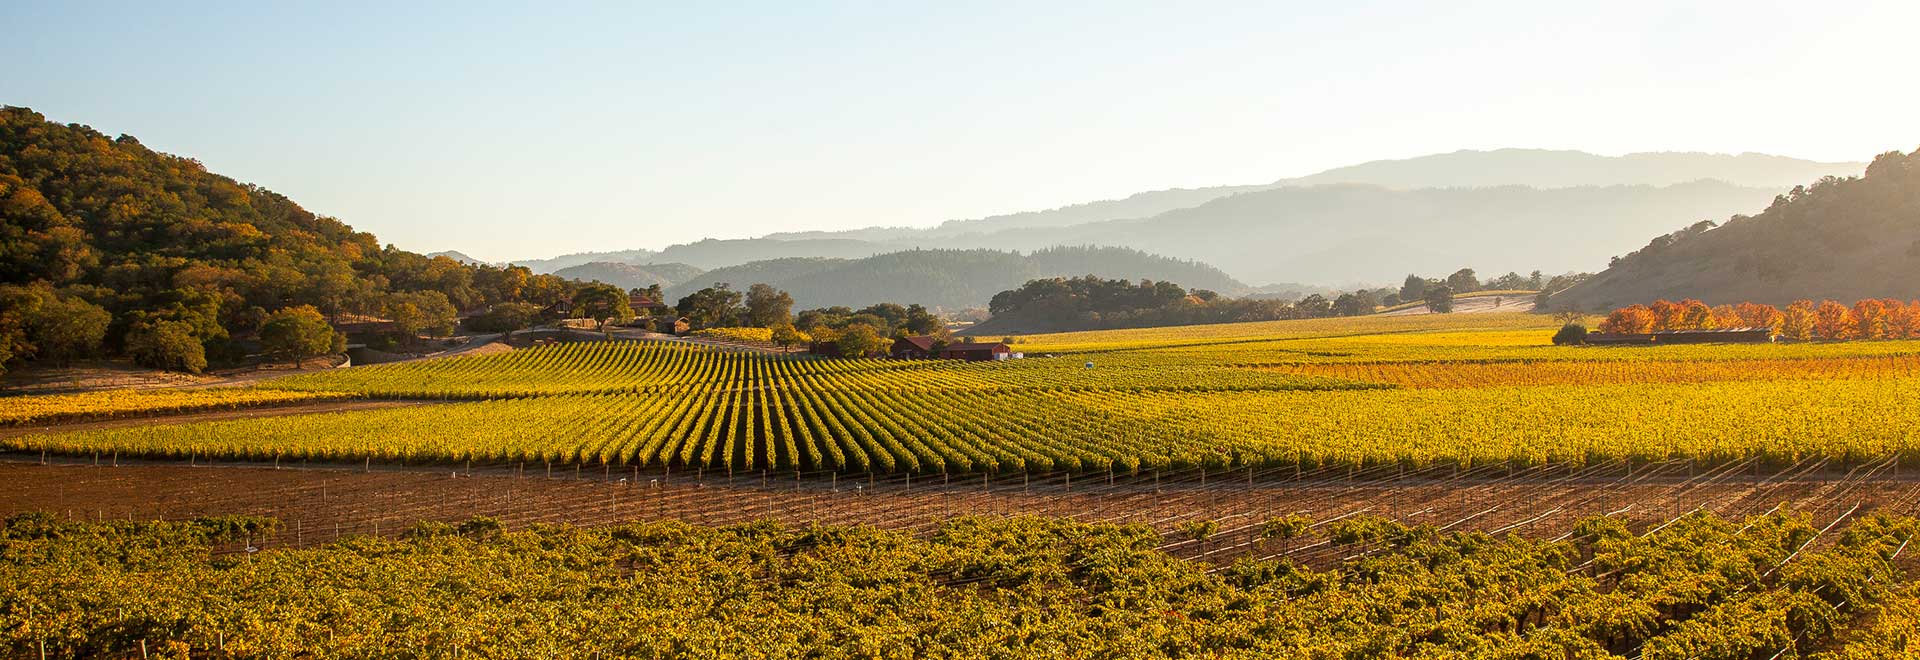 Amerericas California Wine Country Napa Valley Vineyard m